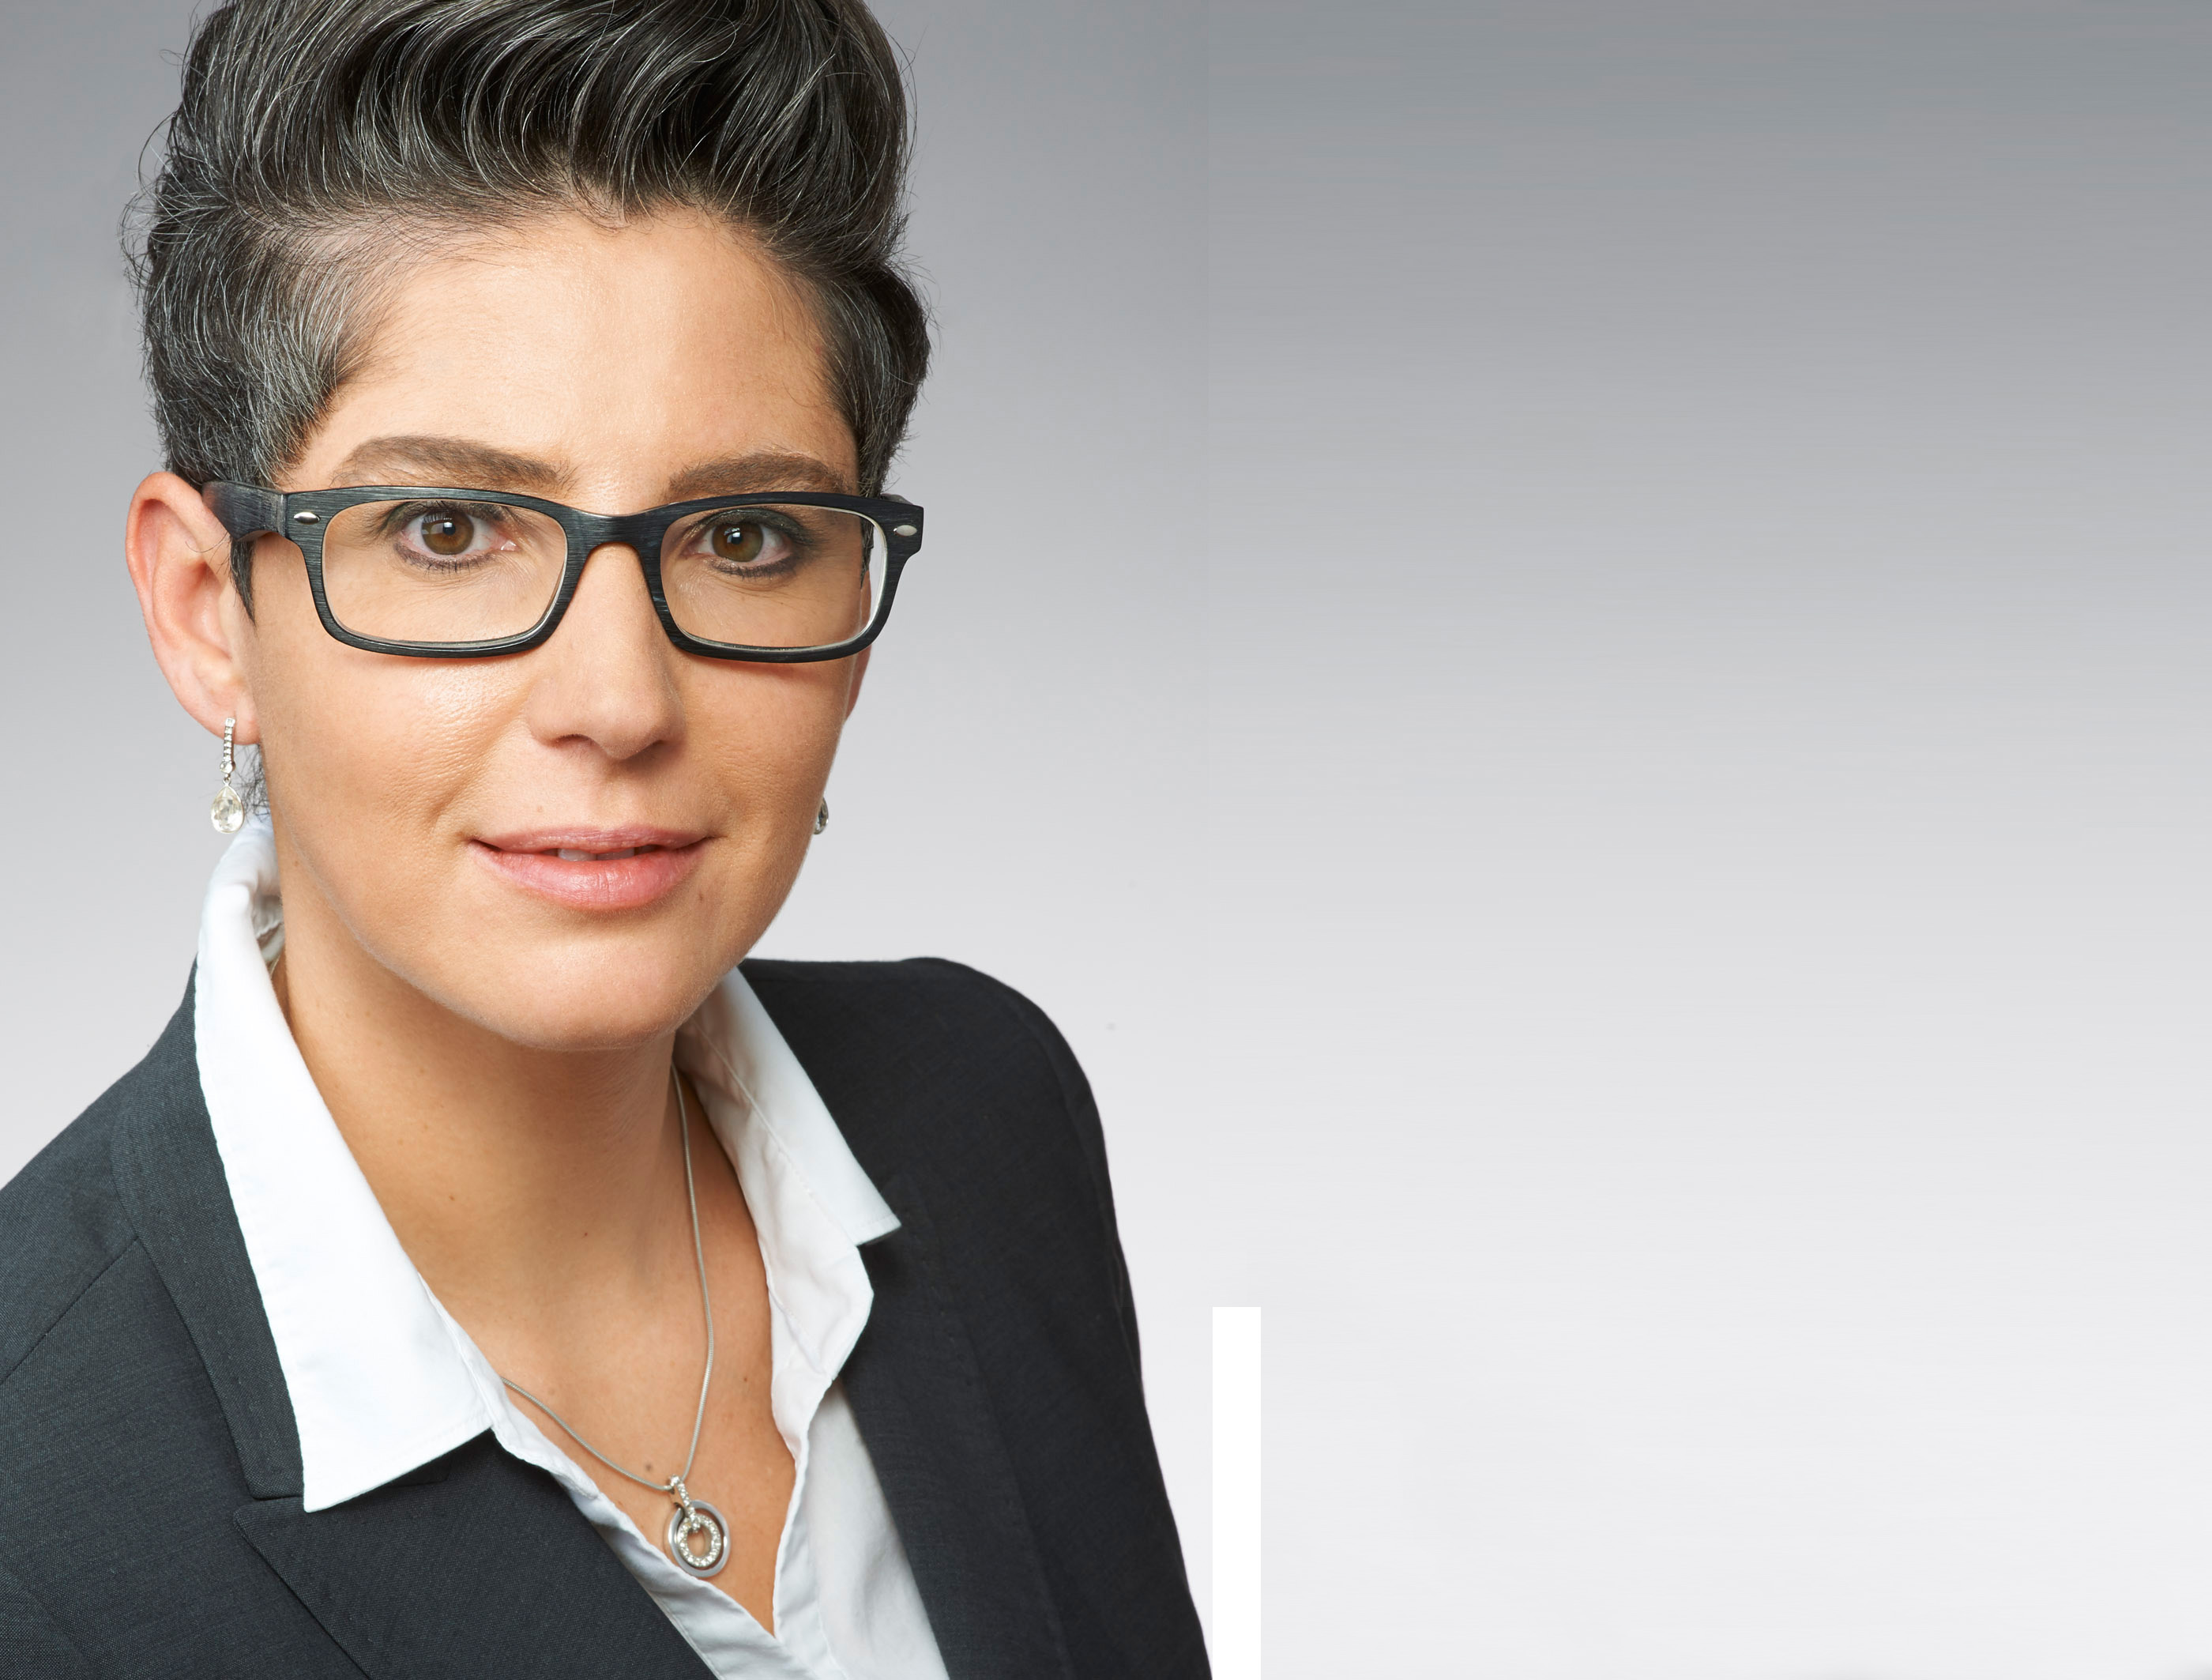 Nadine Buhmann, the new vice president sales at KraussMaffei.